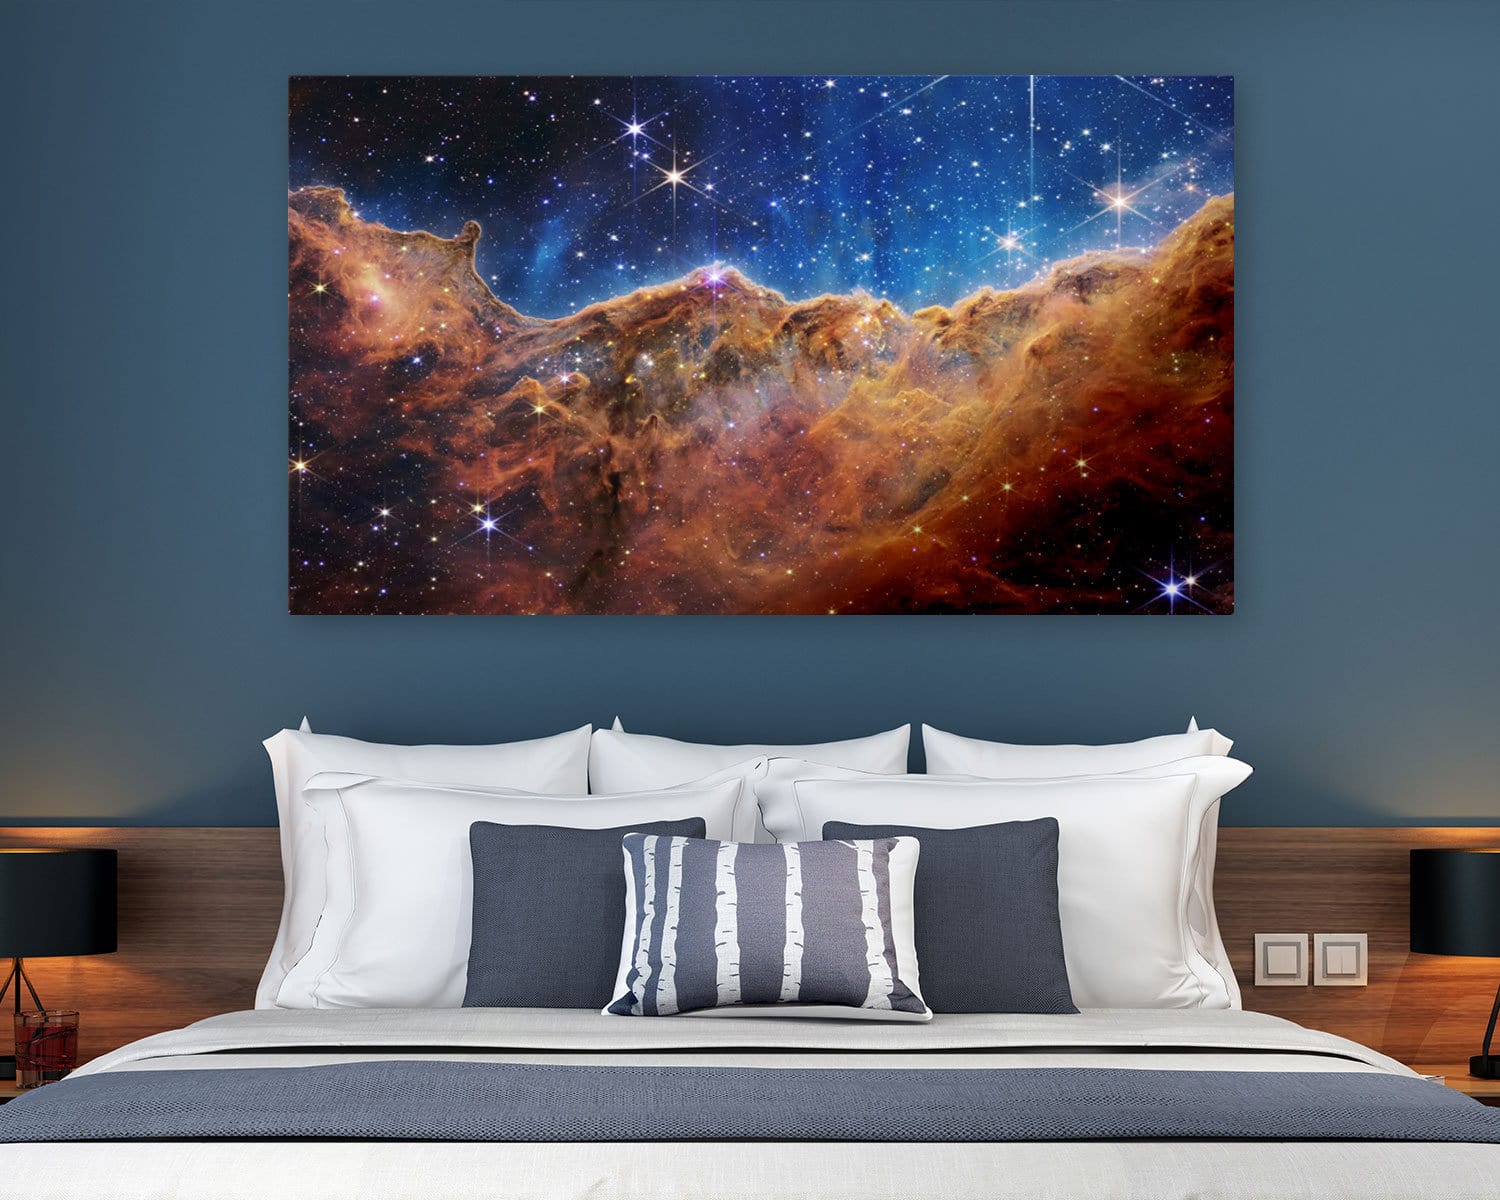 NASA James Webb Image Printed and Displayed in Master Bedroom of Home